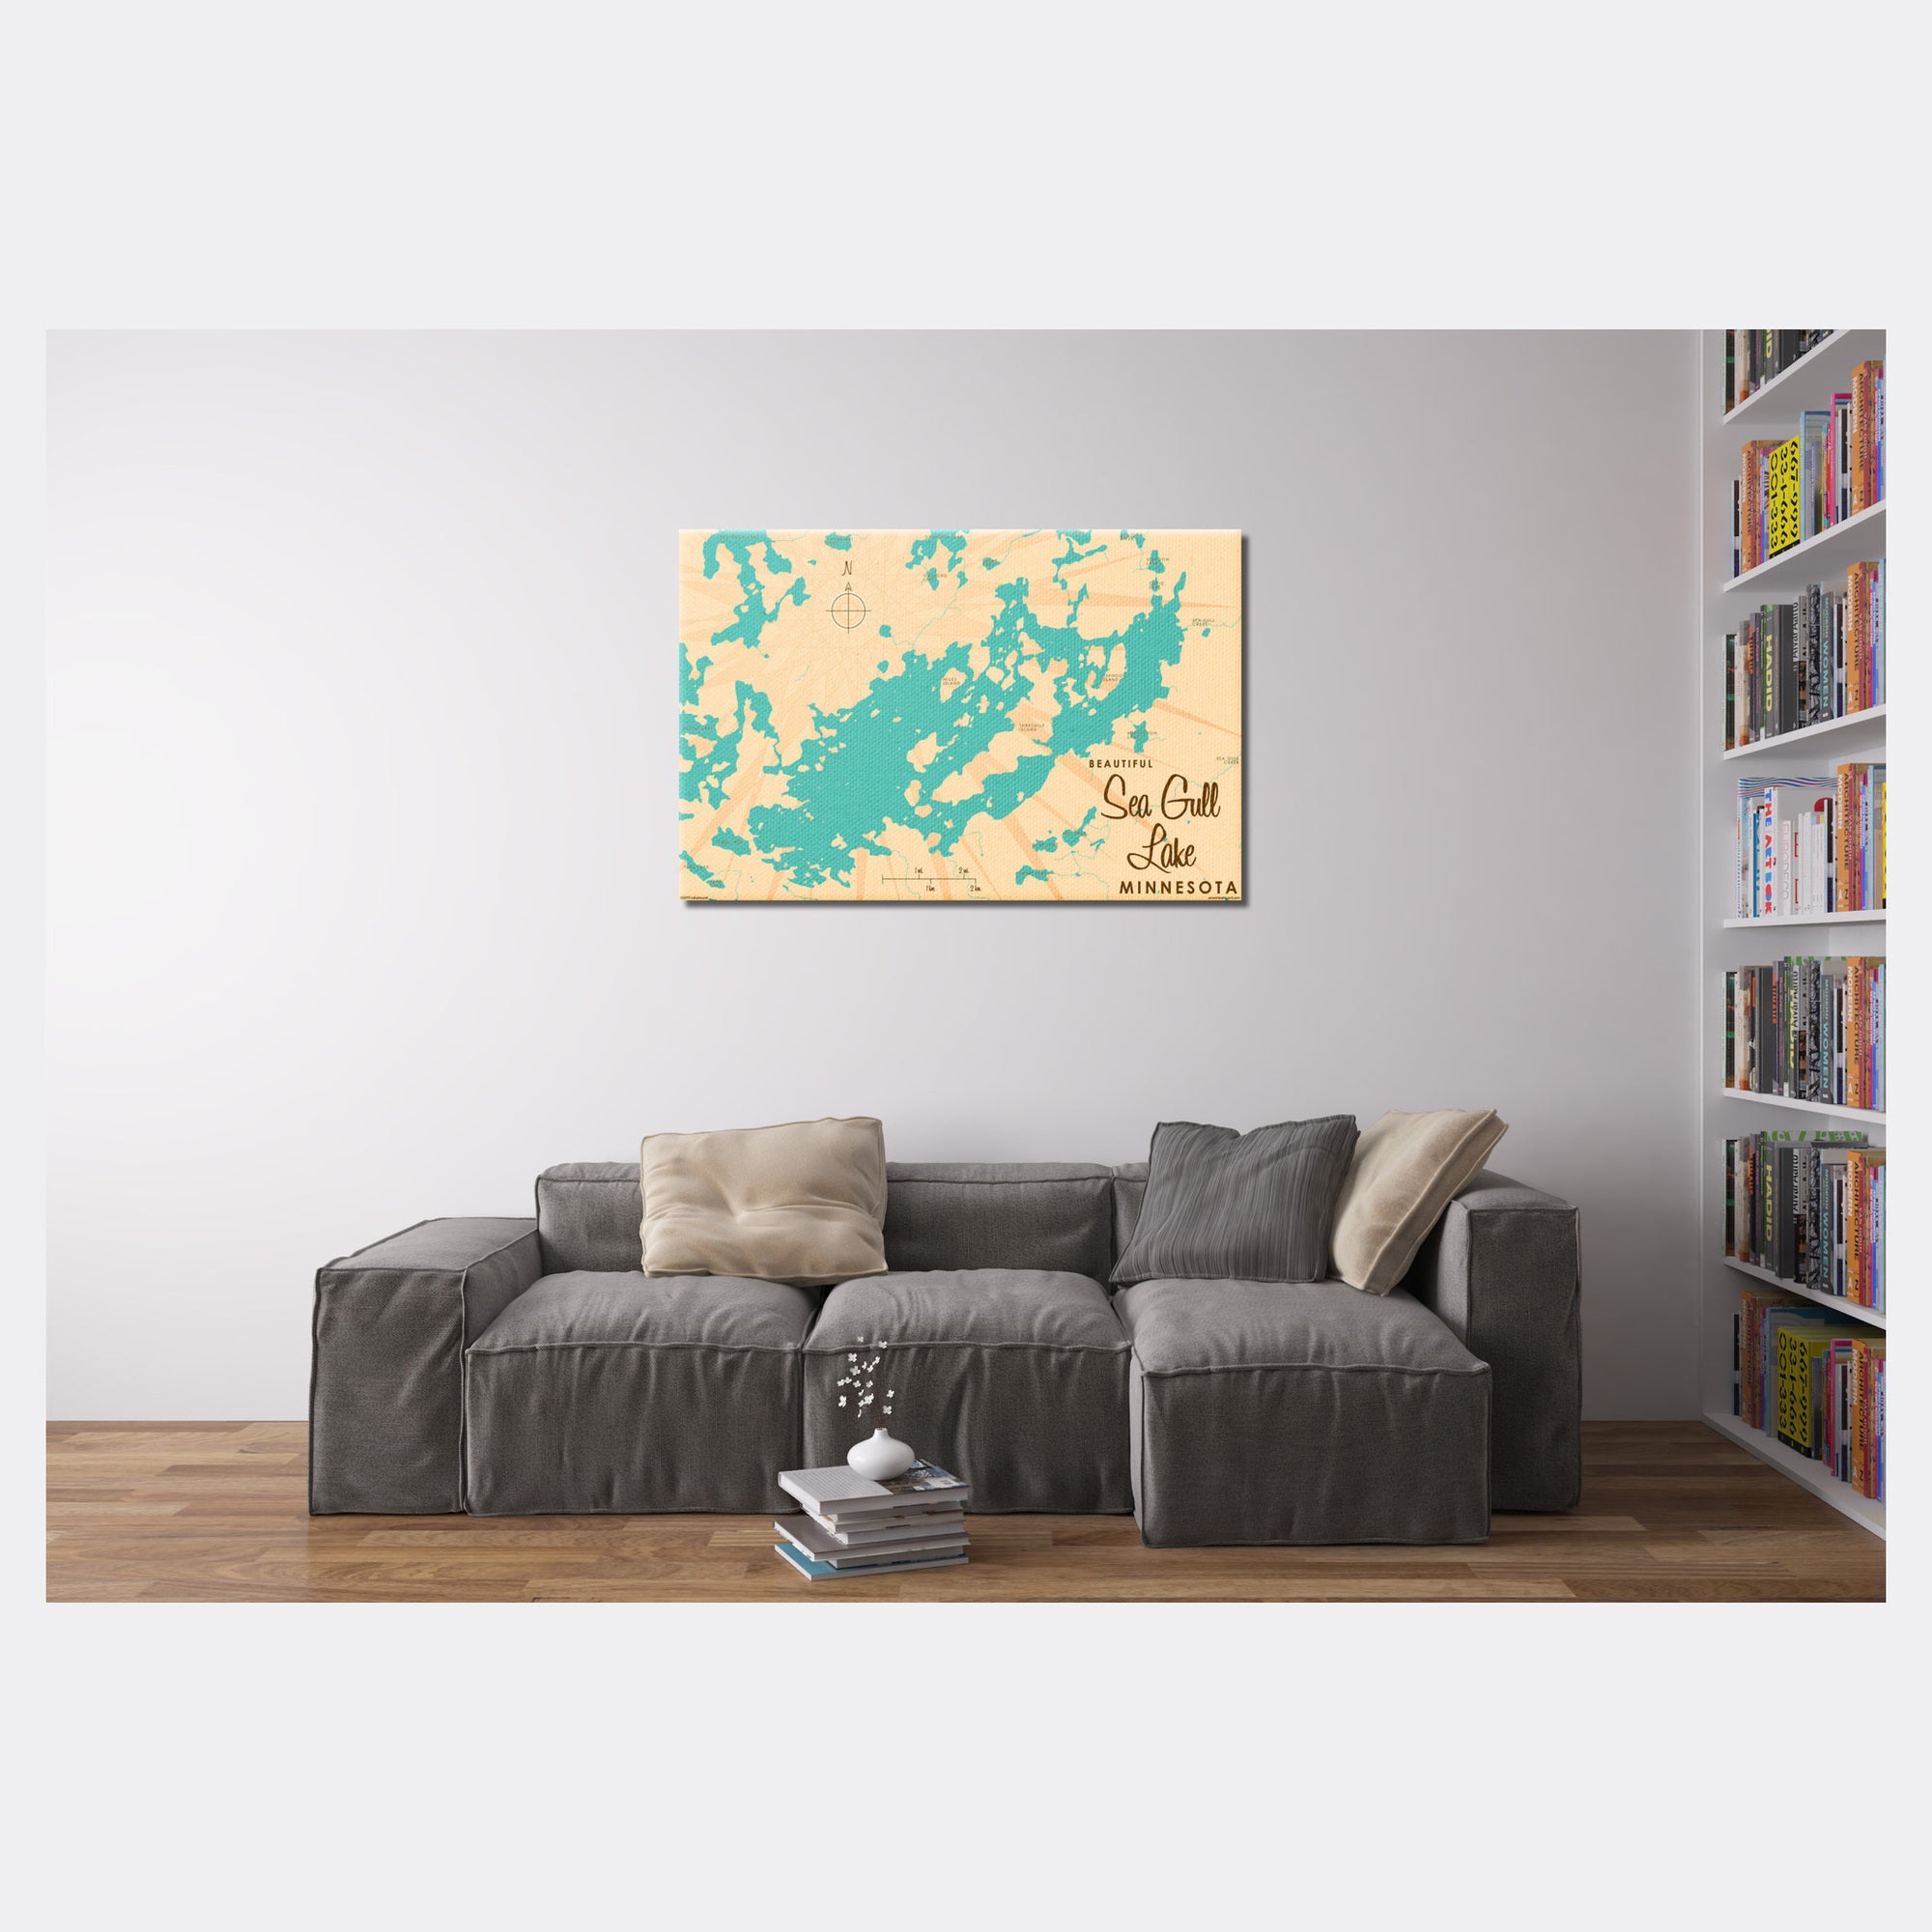 Sea Gull Lake Minnesota, Canvas Print